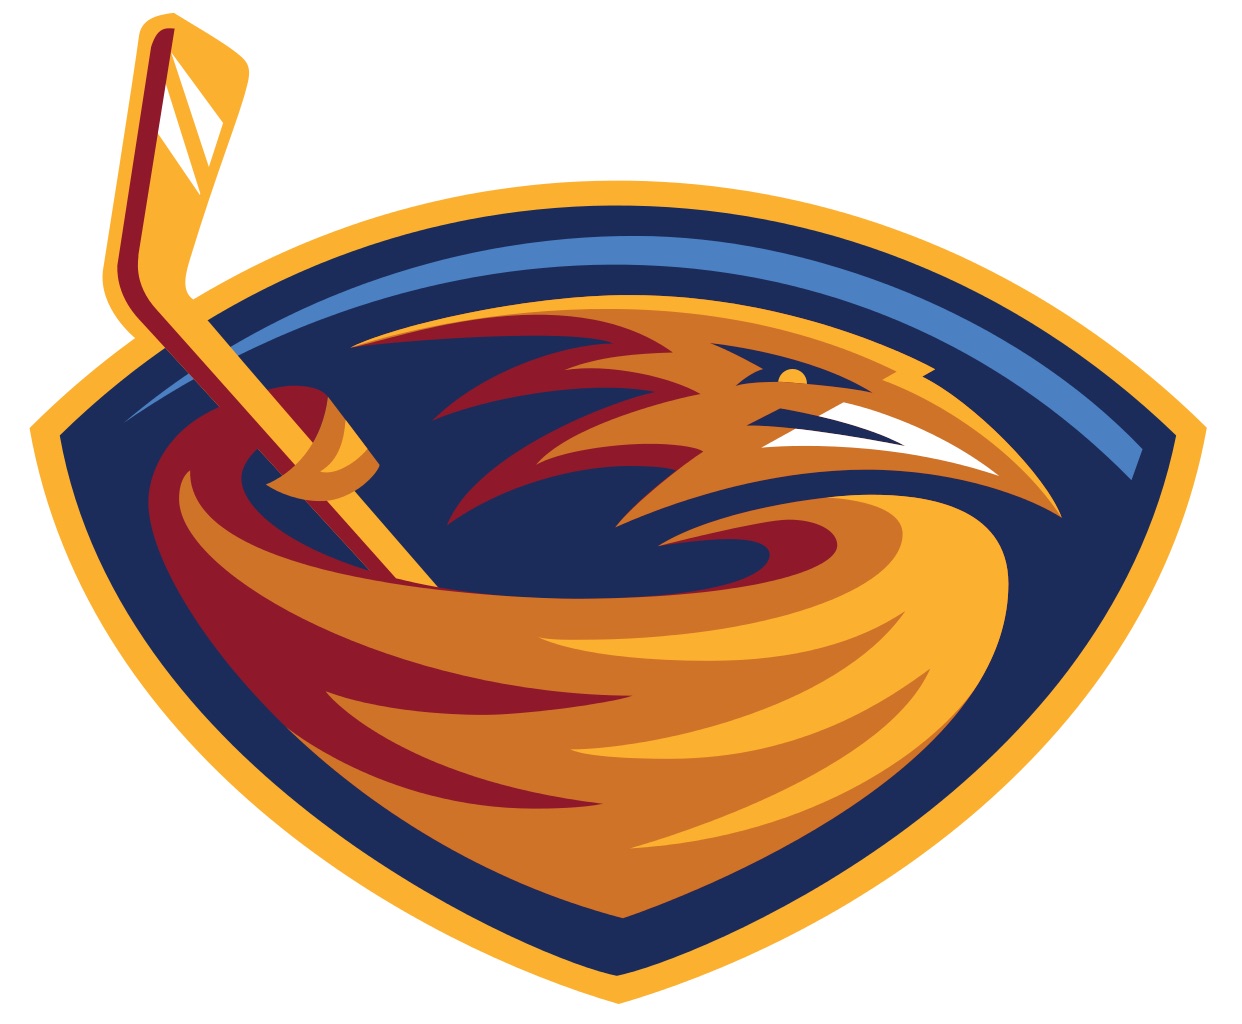 Atlanta Thrashers Home Uniform - National Hockey League (NHL